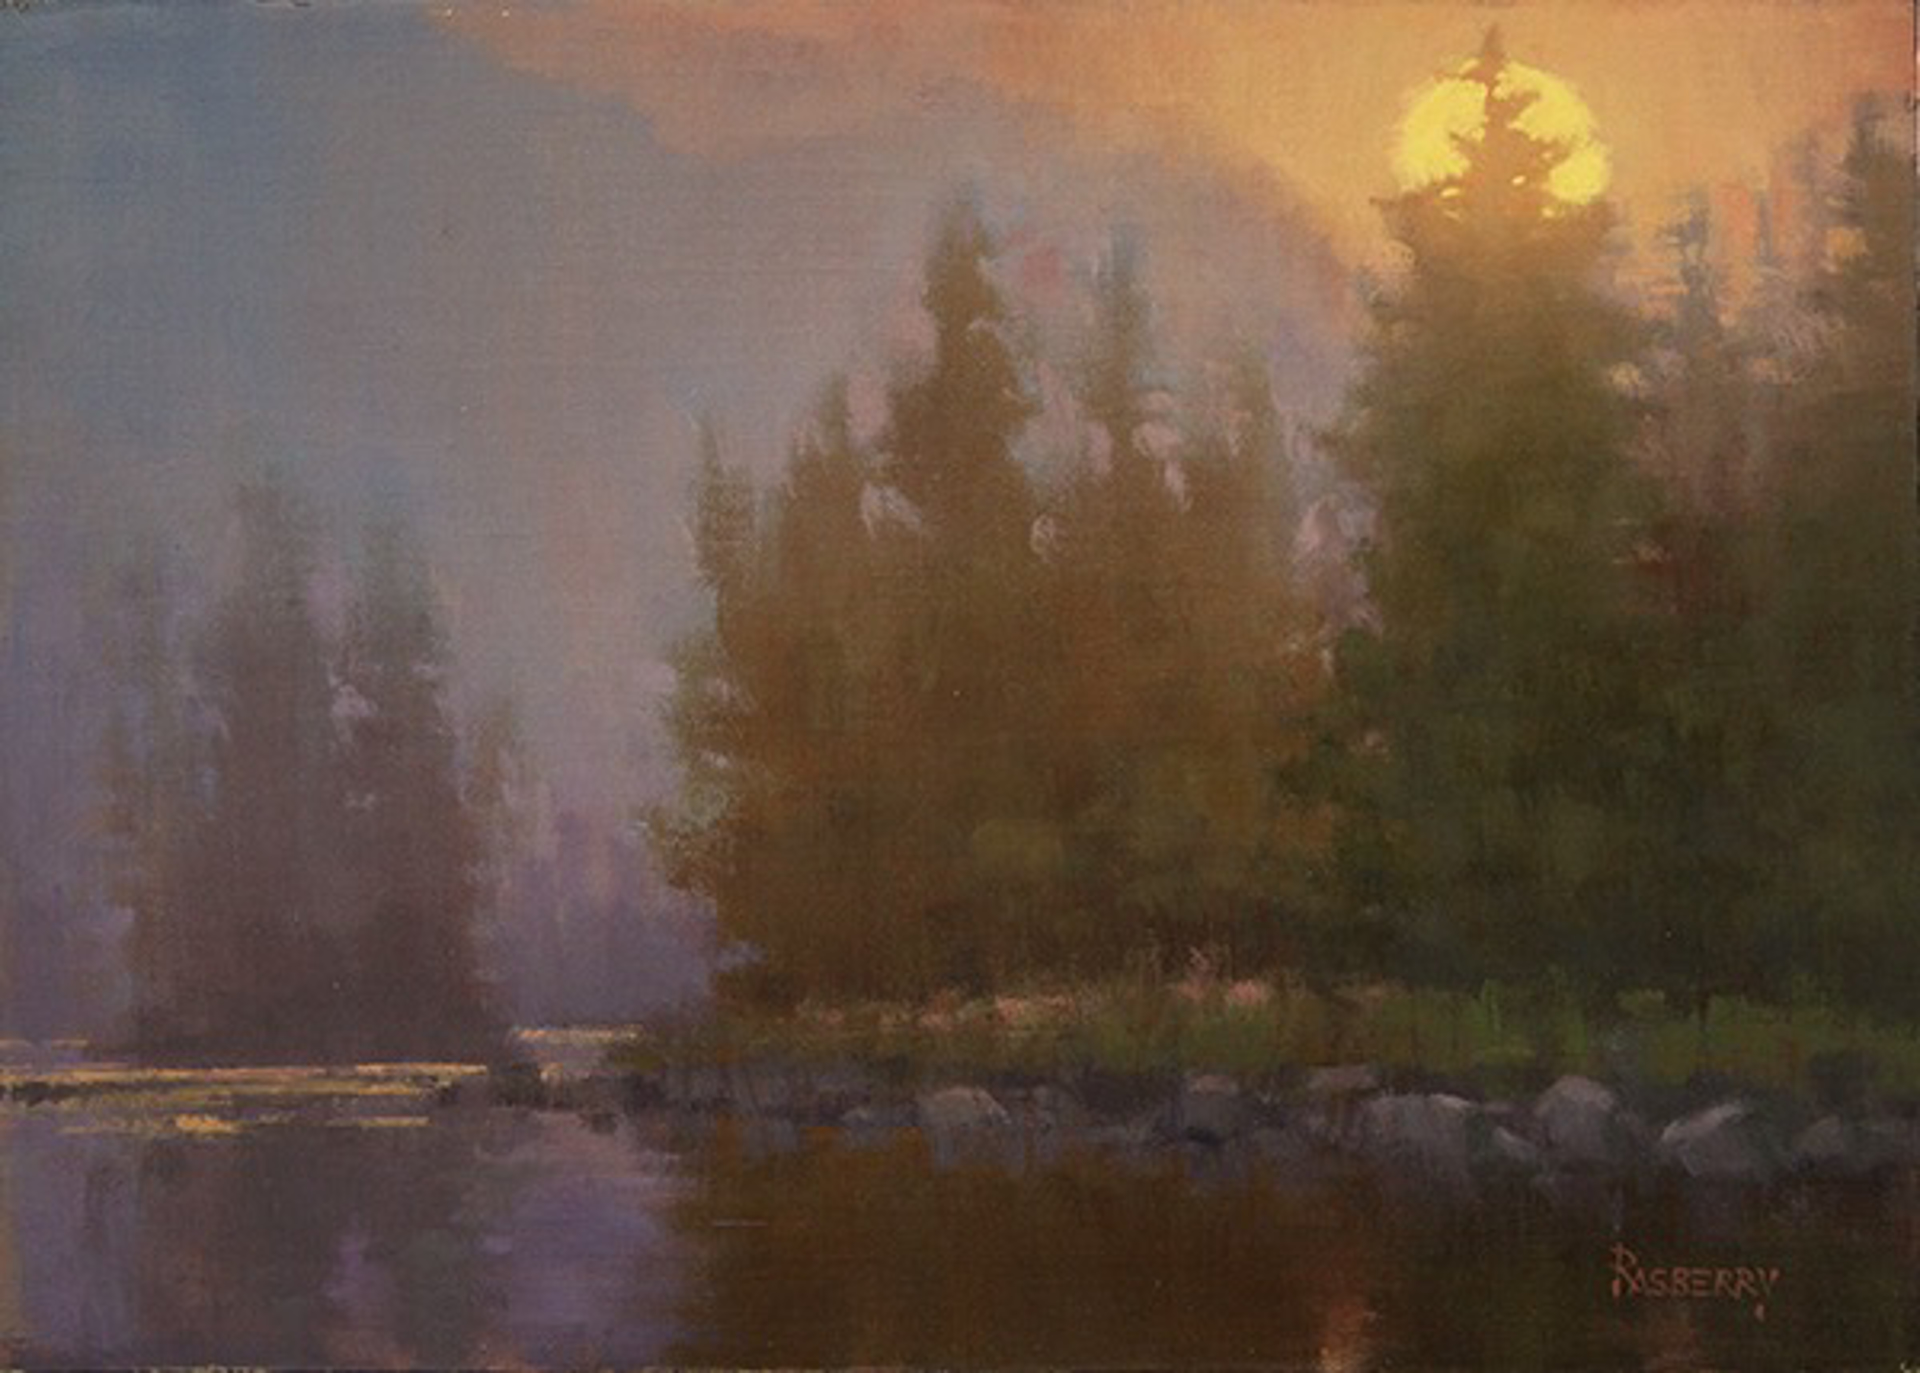 Sunrise through the Fog by John Rasberry